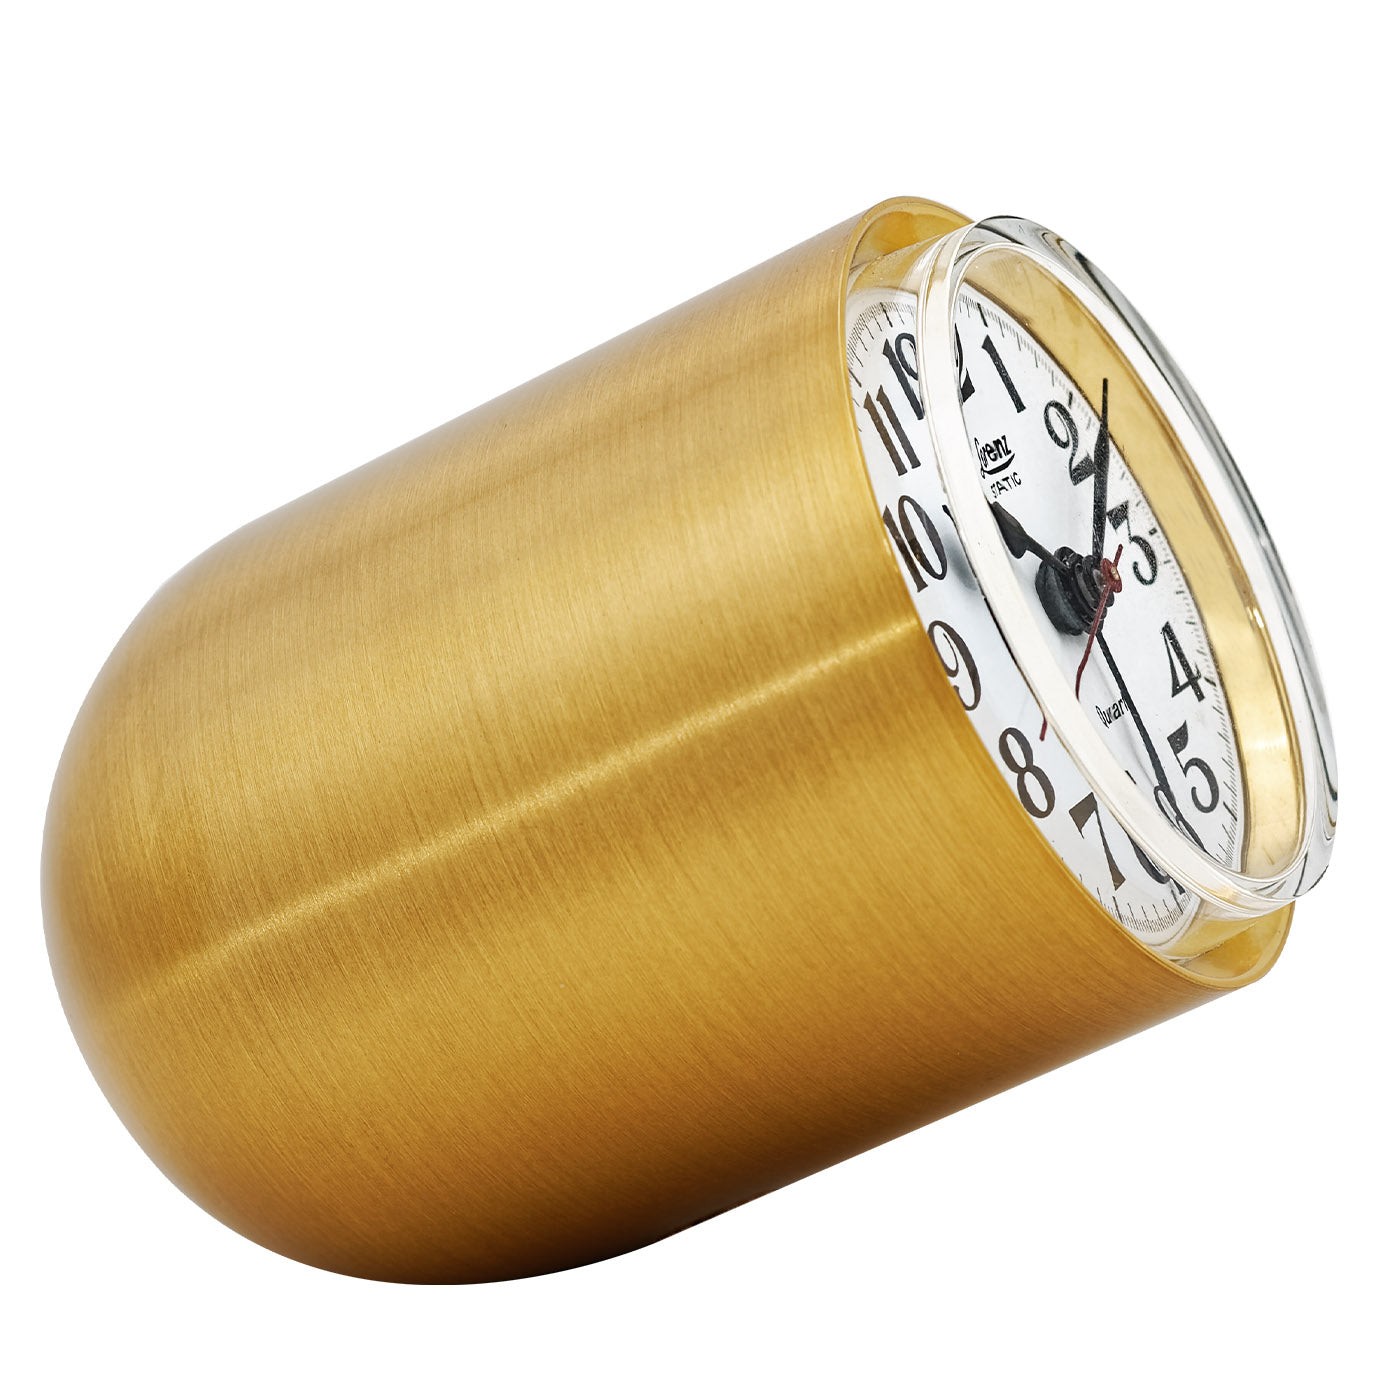 Reloj de sobremesa Static Gold de Richard Sapper - Vista alternativa 1